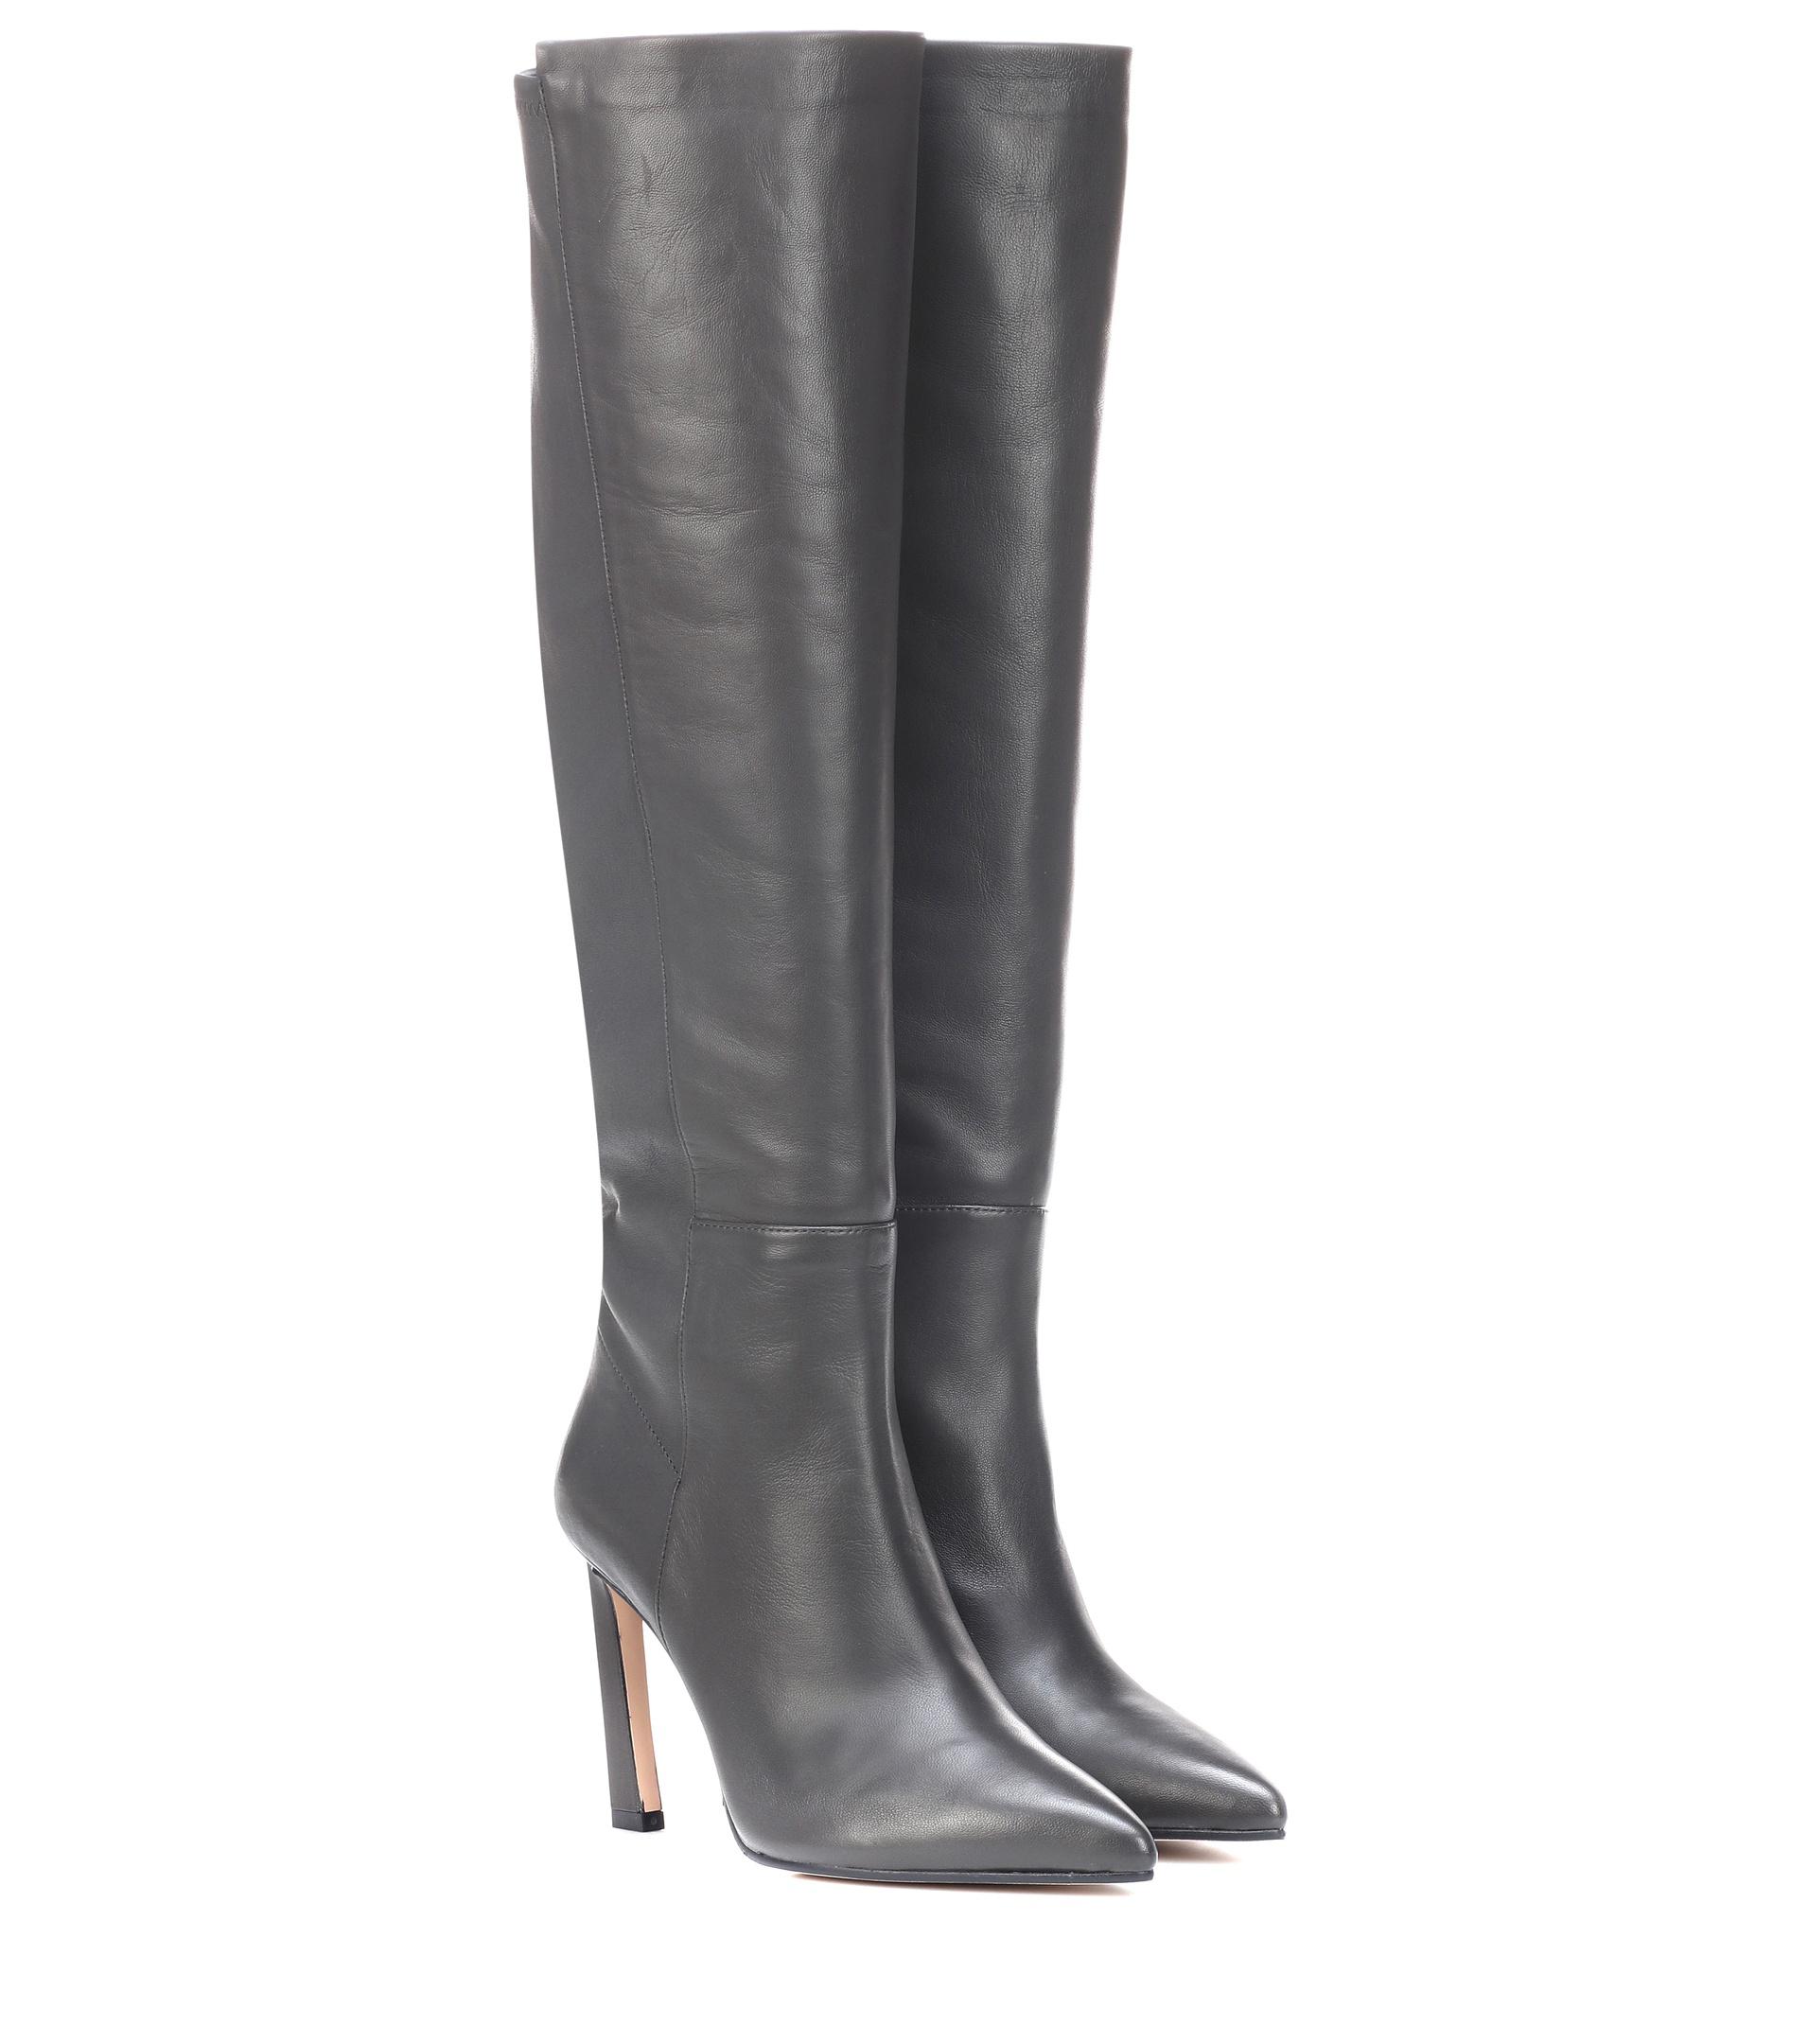 Stuart Weitzman Demi 100 Leather Boots in Grey (Gray) - Lyst